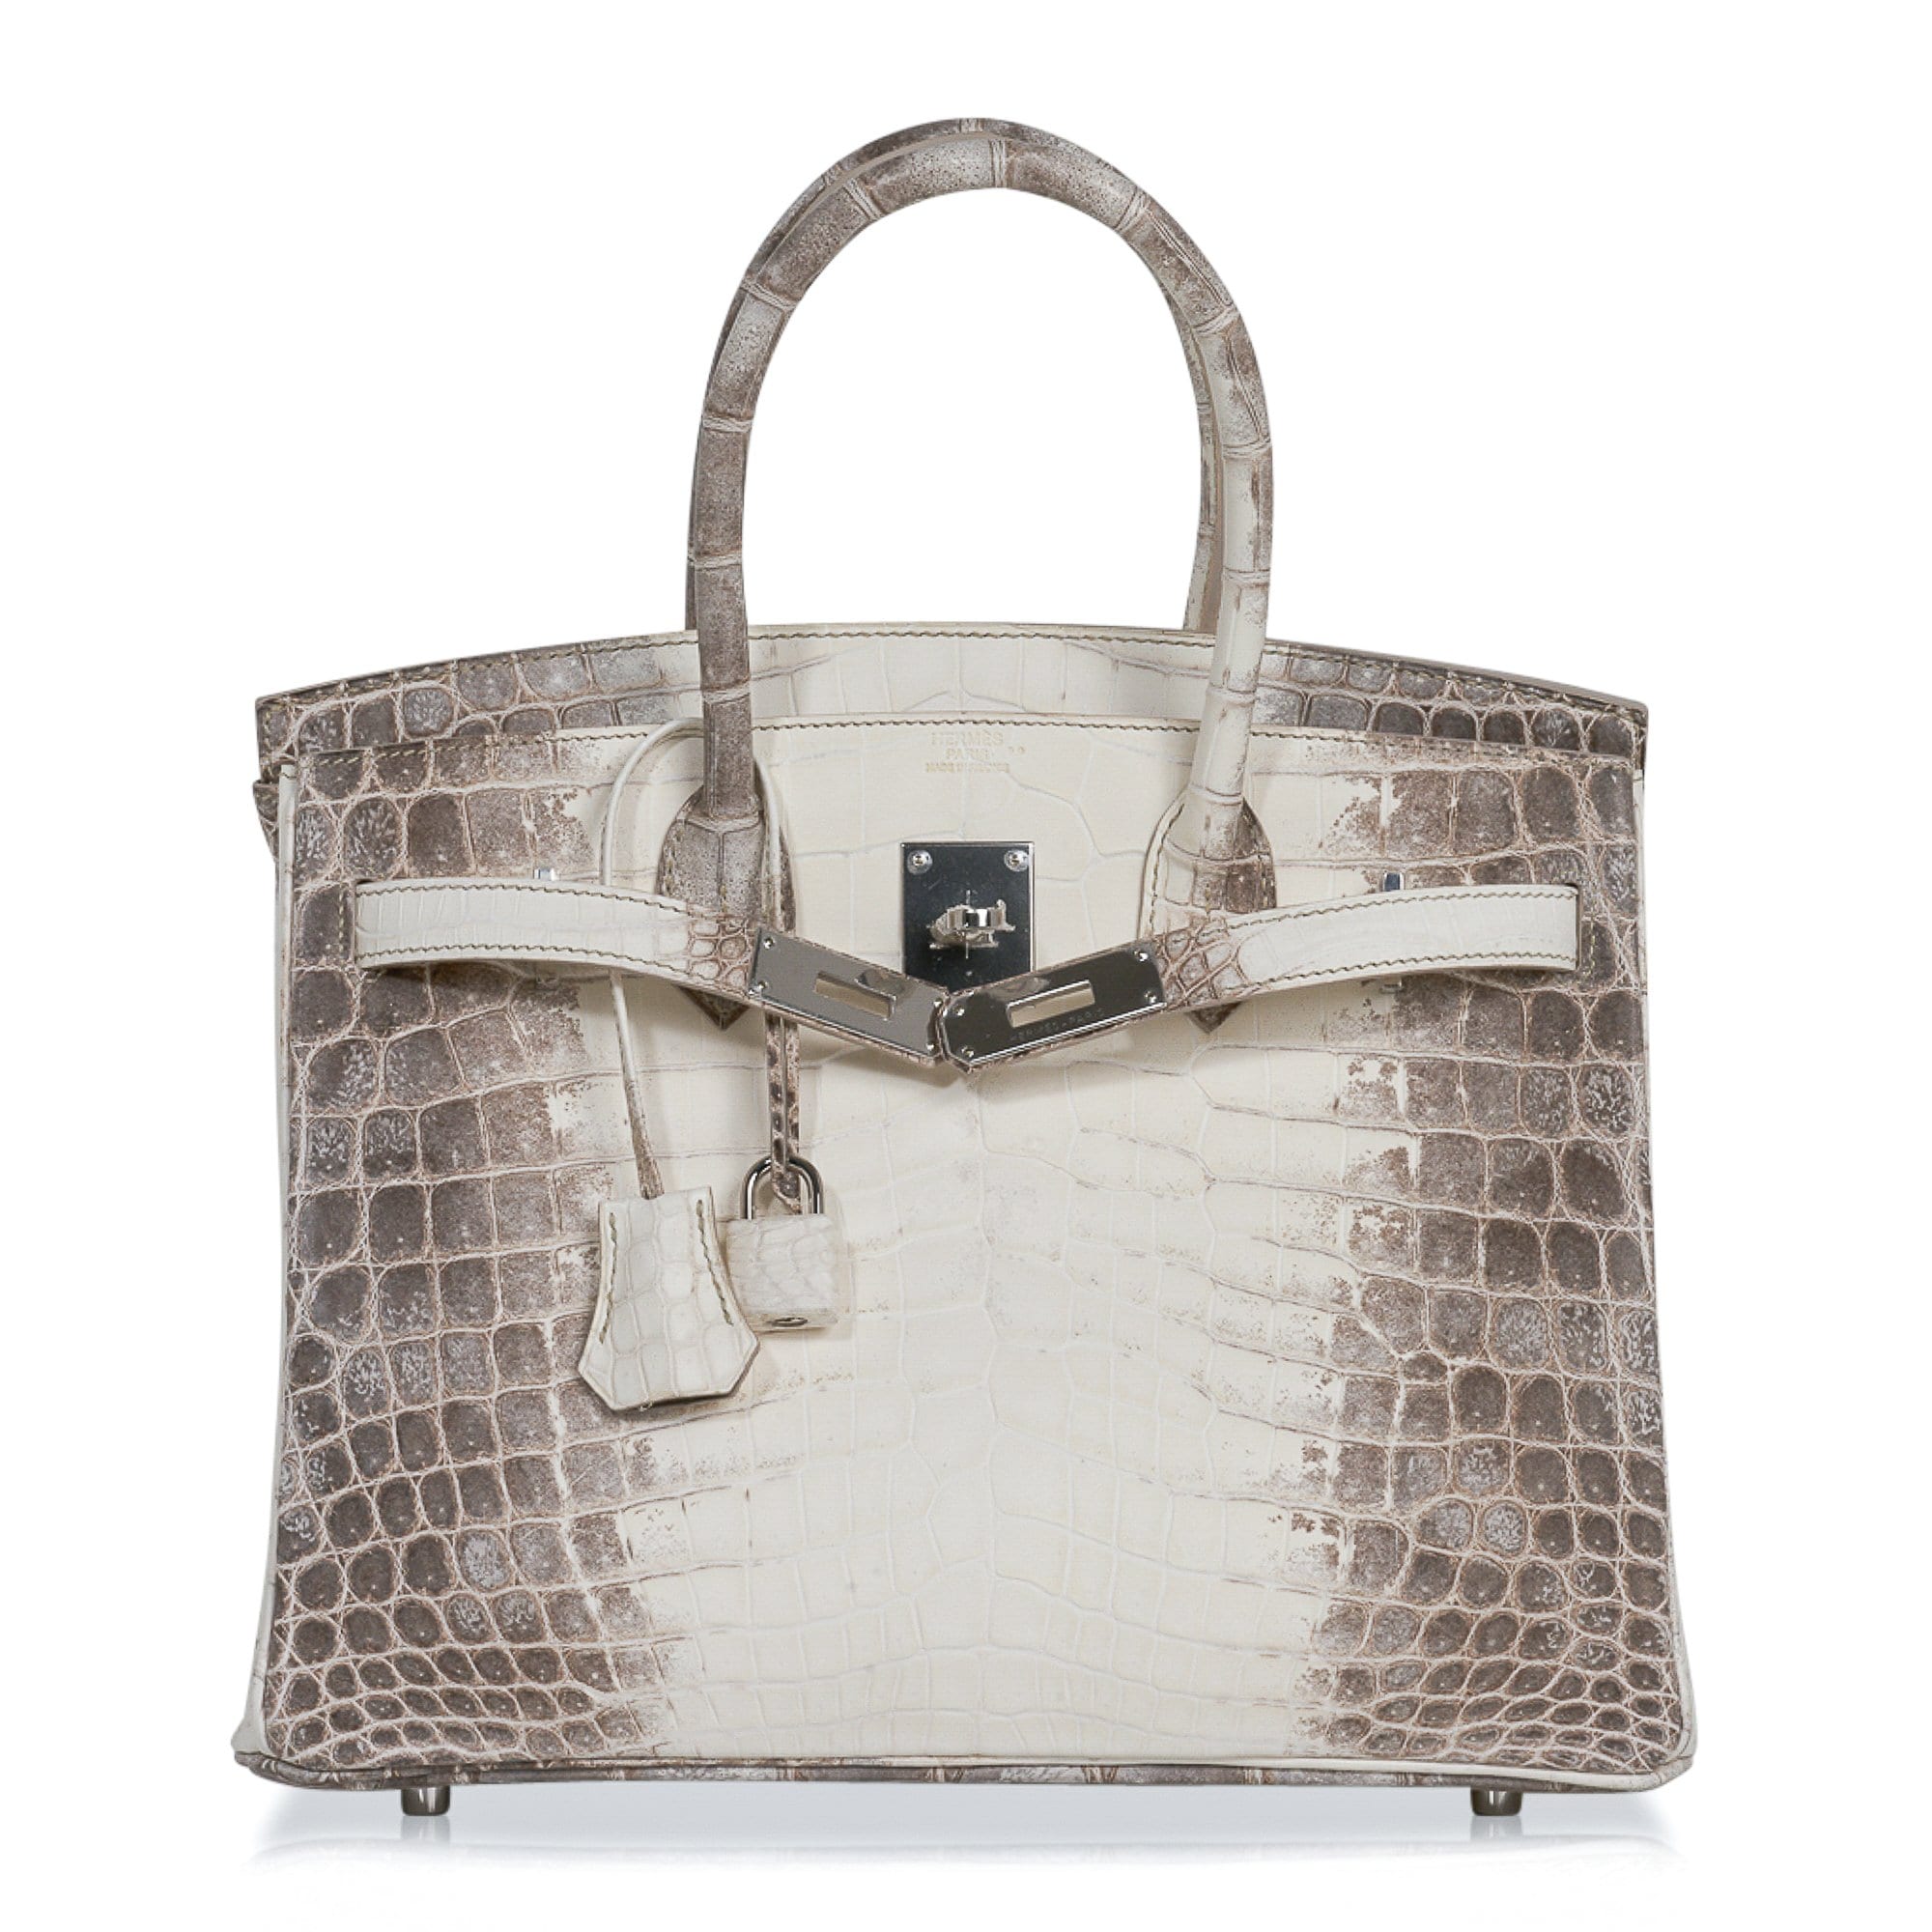 Hermès Birkin 30 Blanc Himalaya Crocodile Bag replica - Affordable